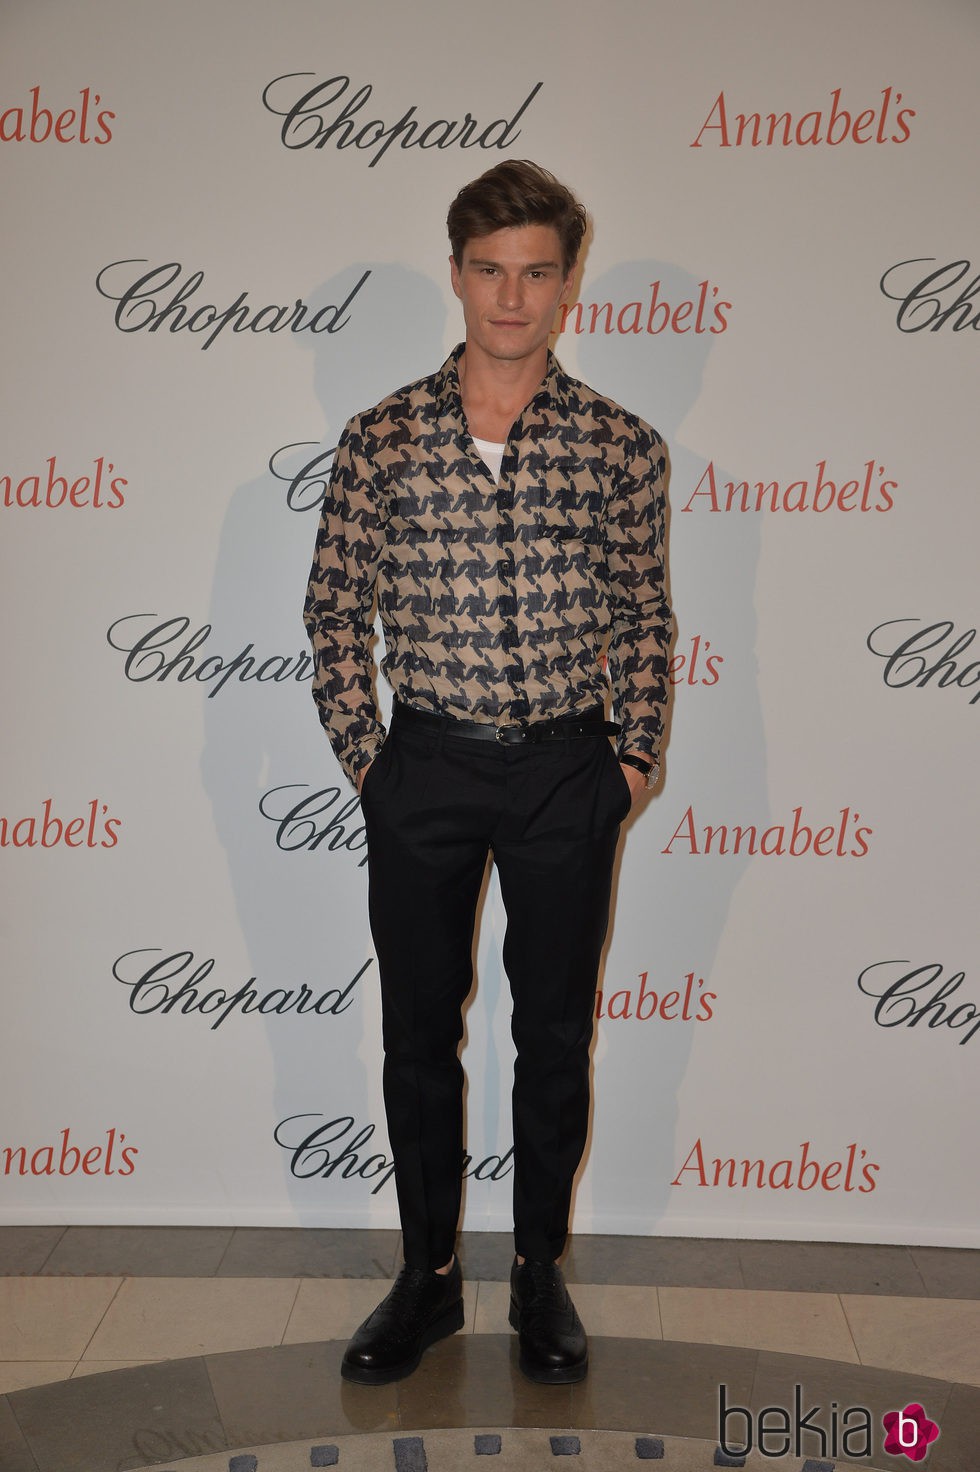 Oliver Cheshire en la fiesta Chopard Annabel's del Festival de Cannes 2015